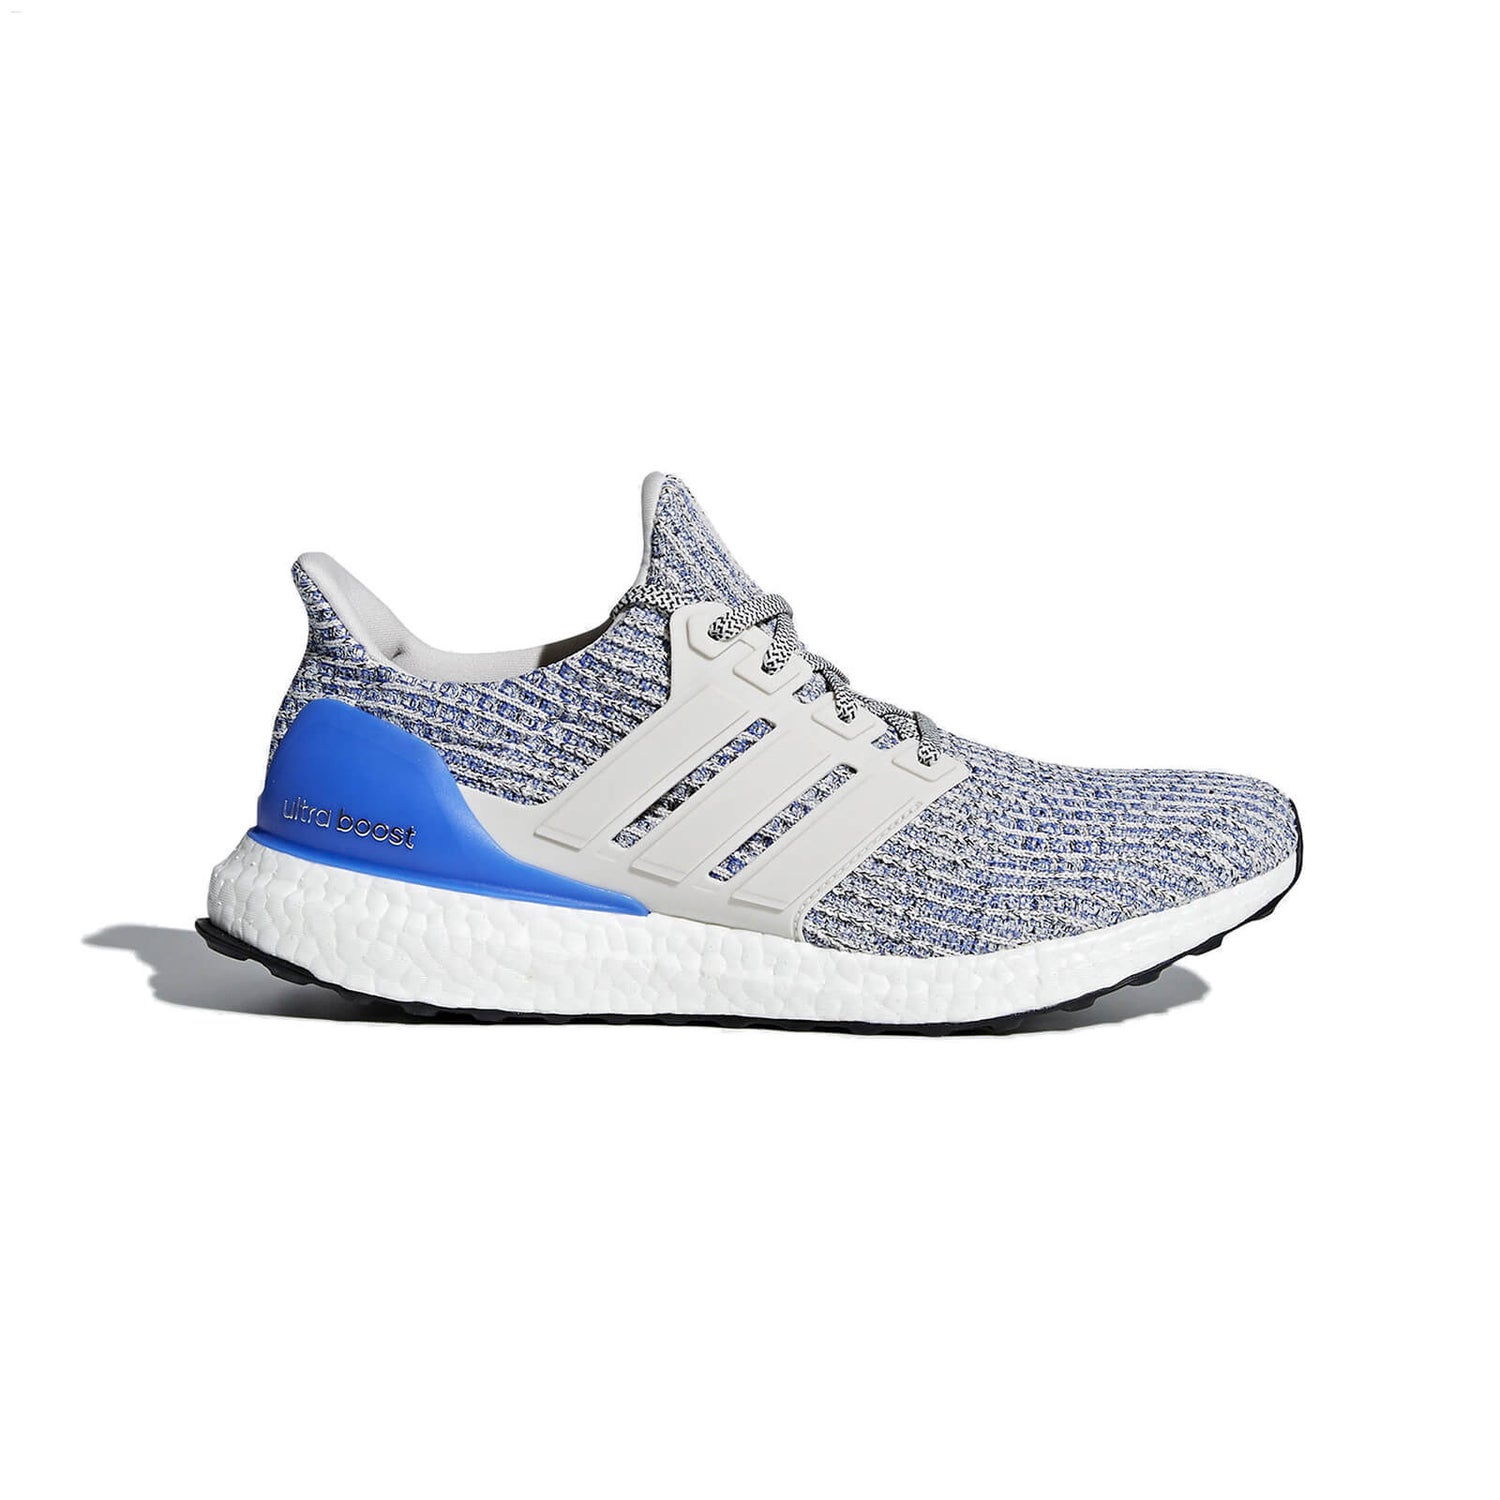 adidas Ultraboost Running Shoes - Blue/White | ProBikeKit.com